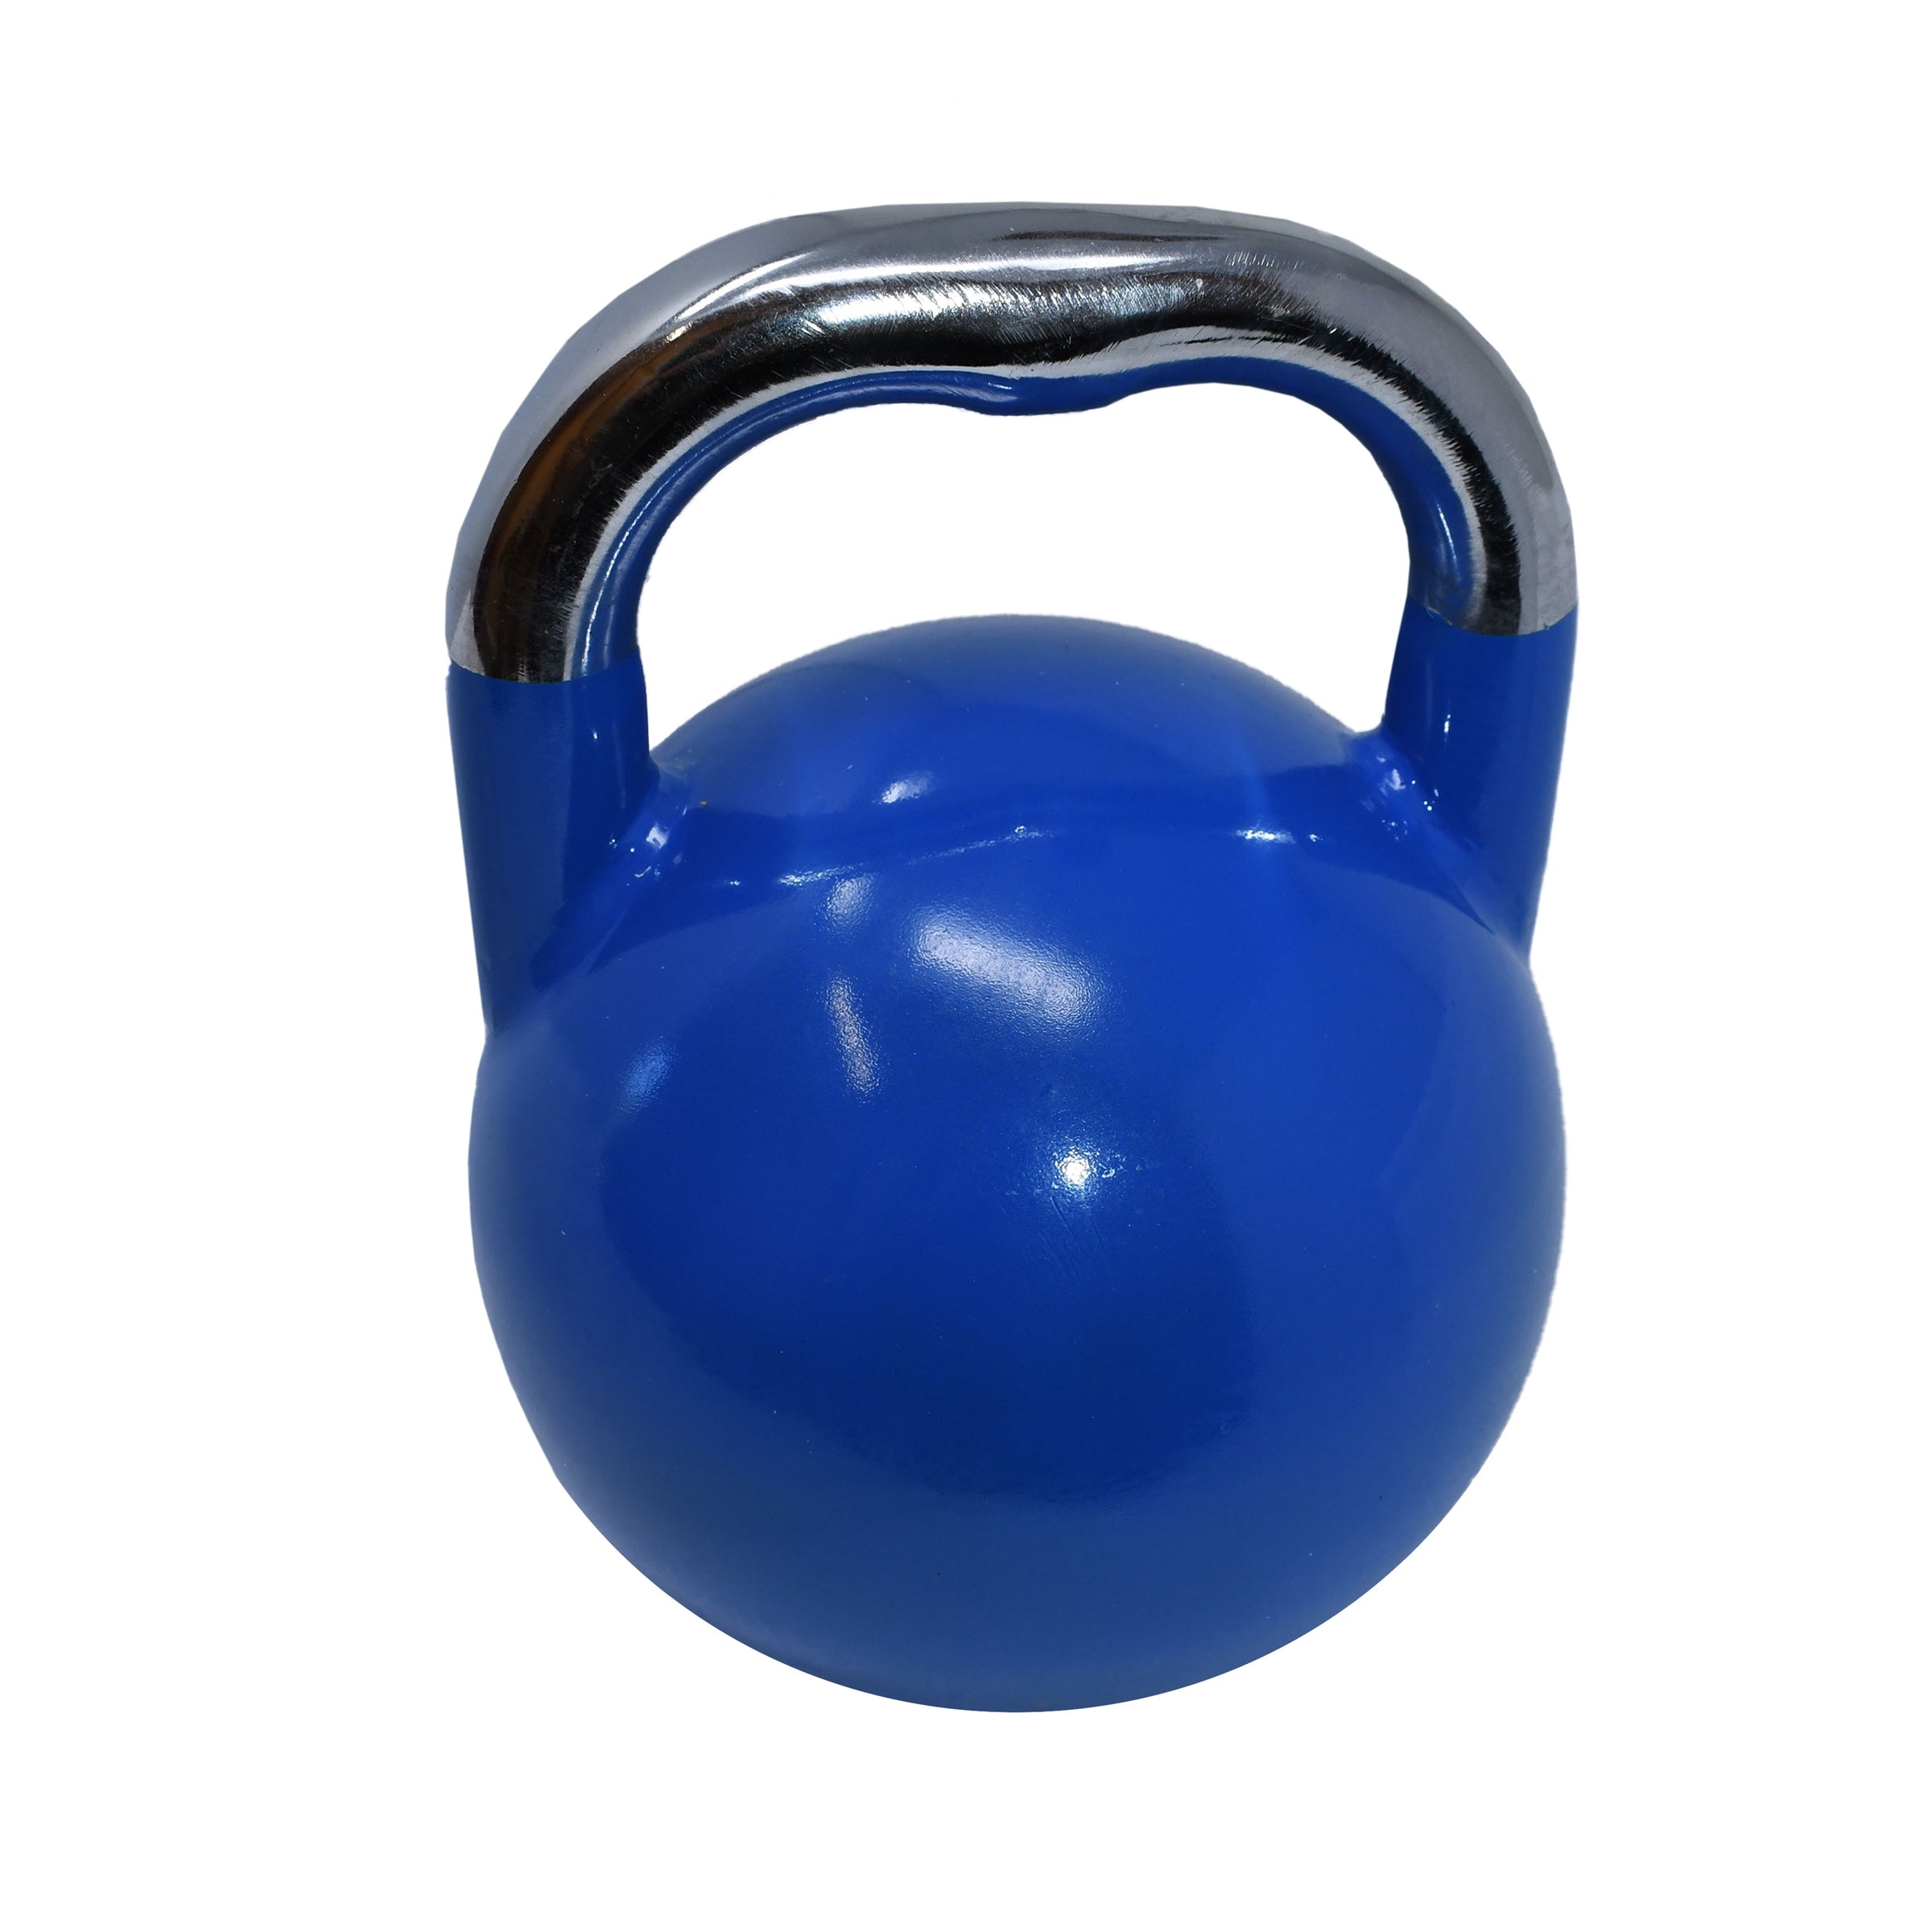 Premium Coated Steel Kettlebell - 22 lbs (10 kg) - Blue